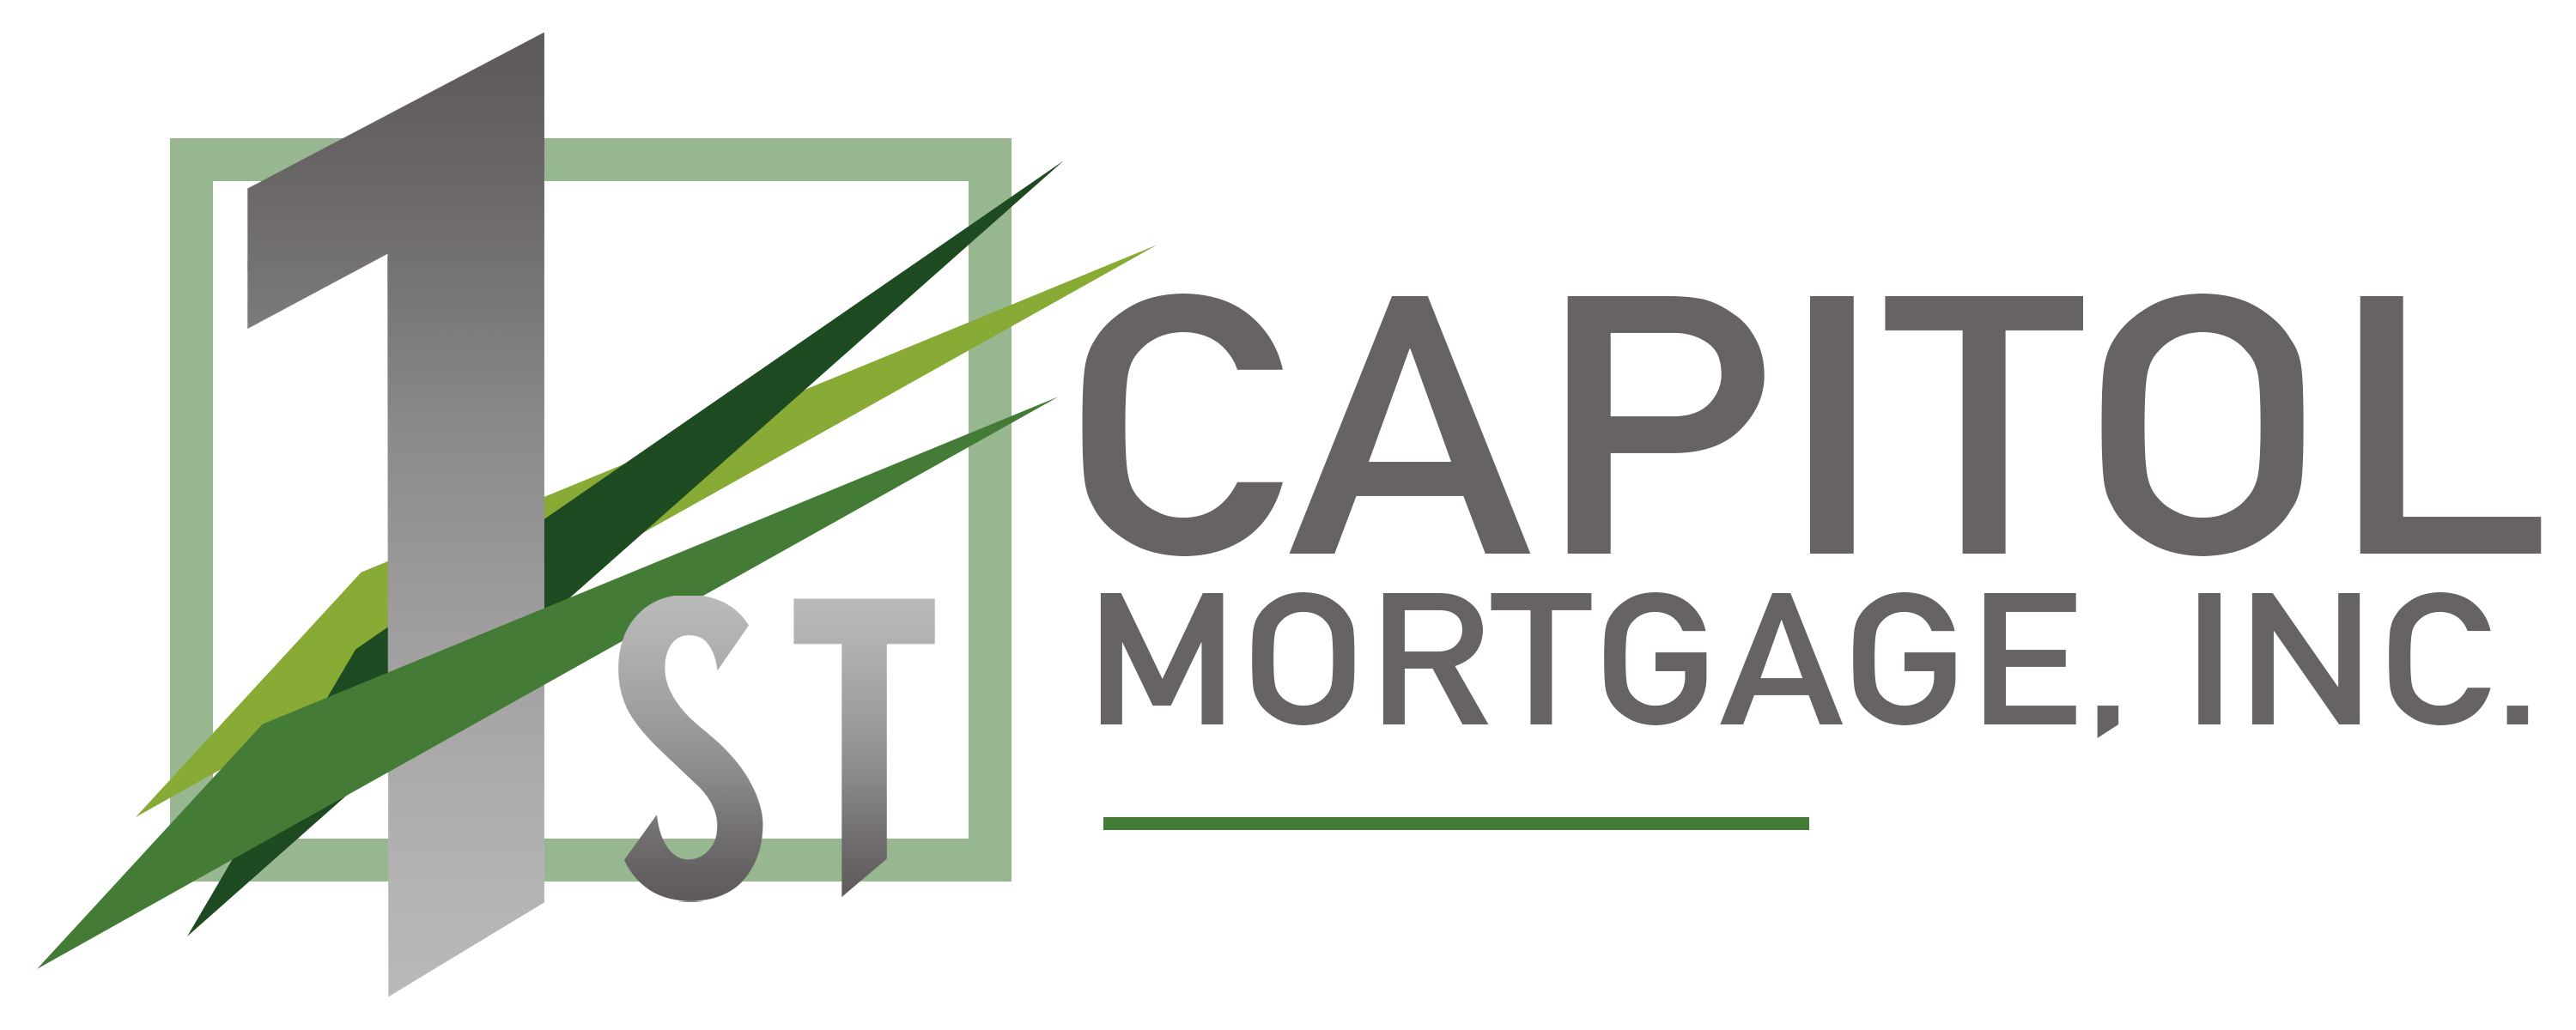 1st Capitol Mortgage Inc